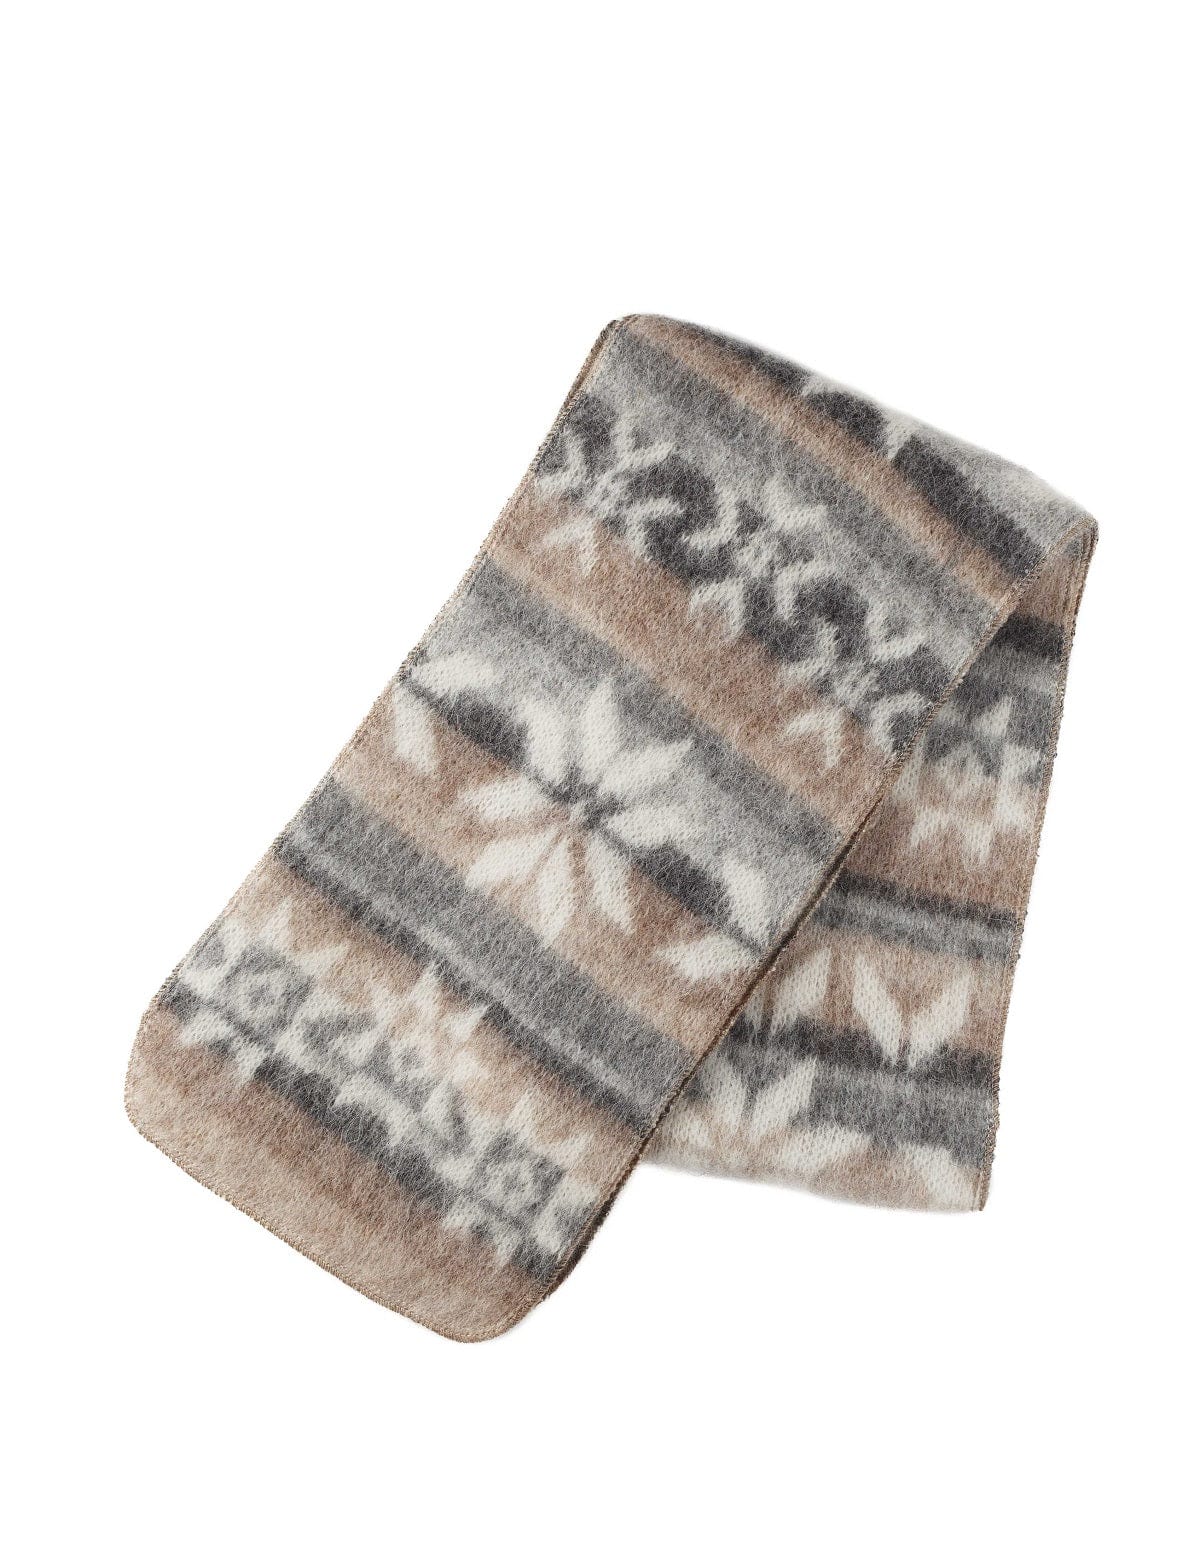 Brushed wool scarf 8-petalled rose pattern - Beige / White / Grey - The Icelandic Store